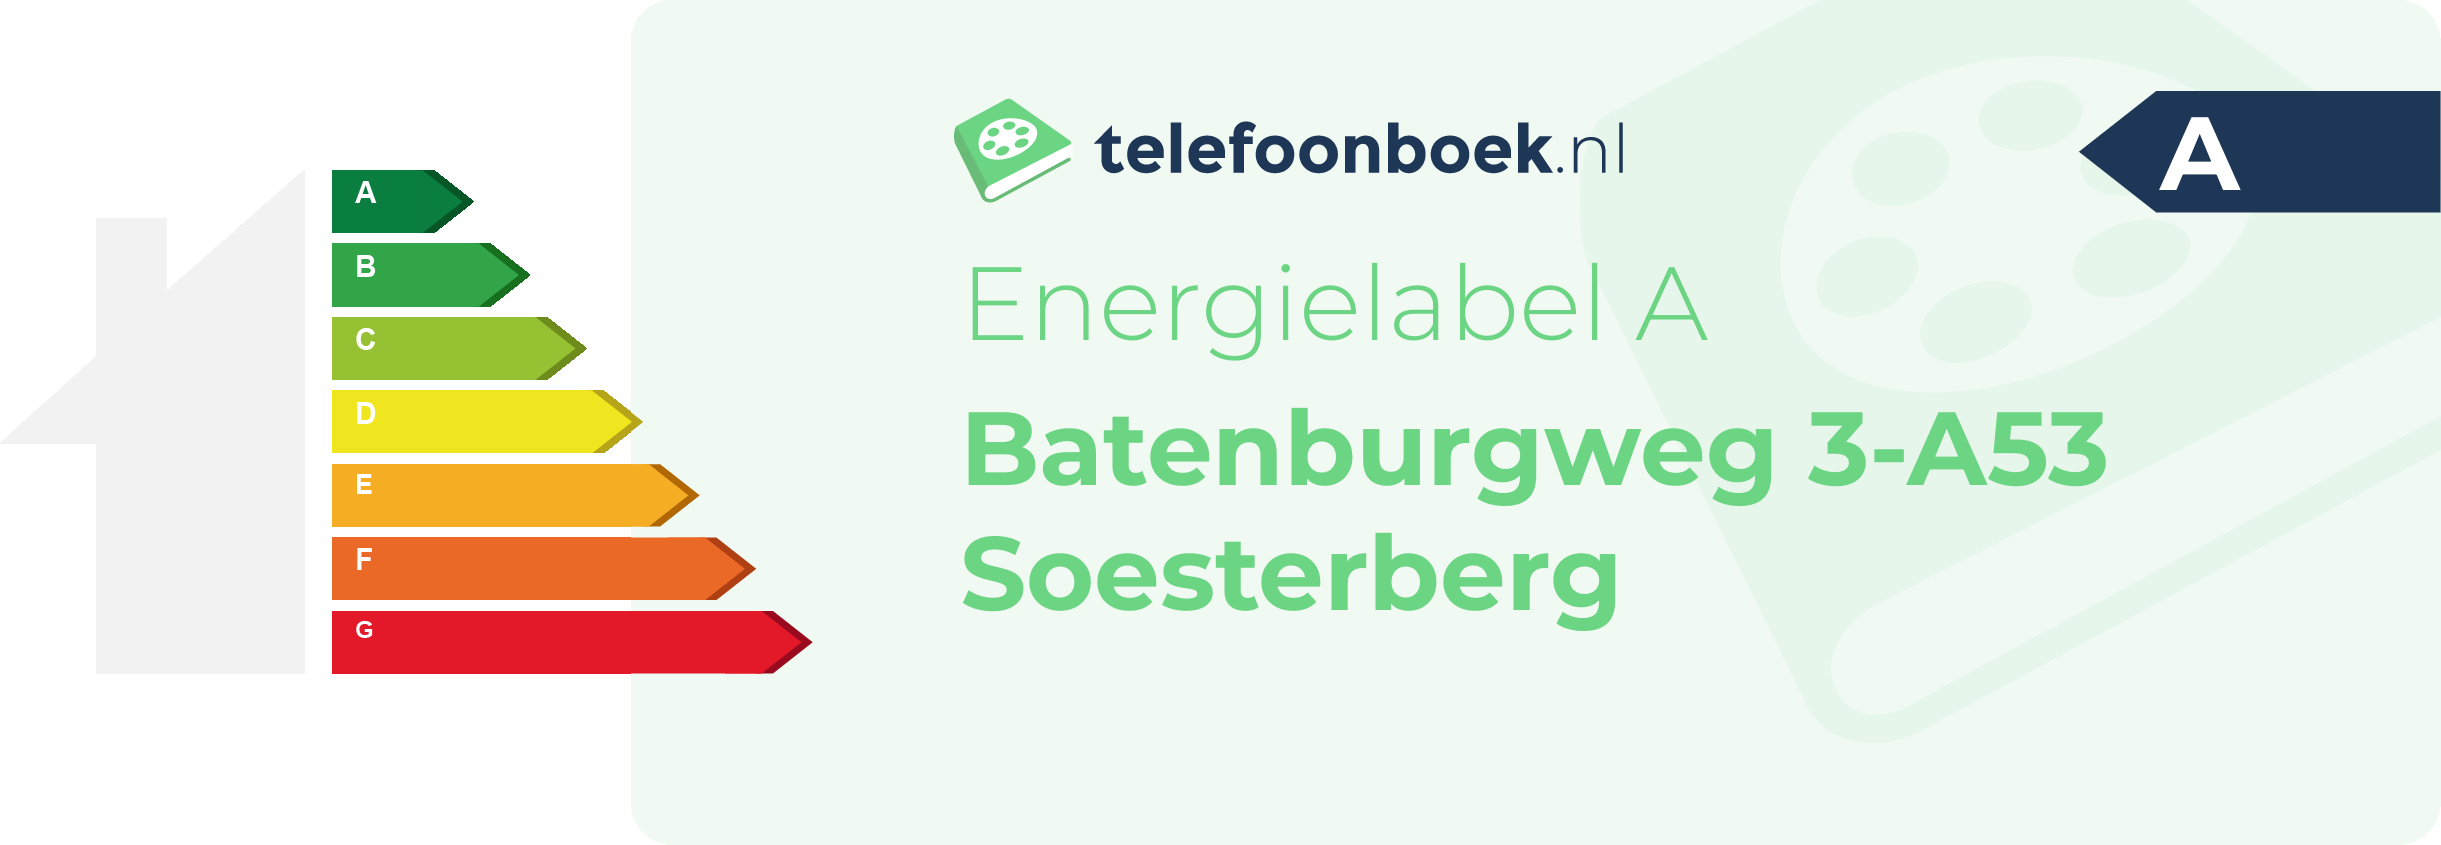 Energielabel Batenburgweg 3-A53 Soesterberg